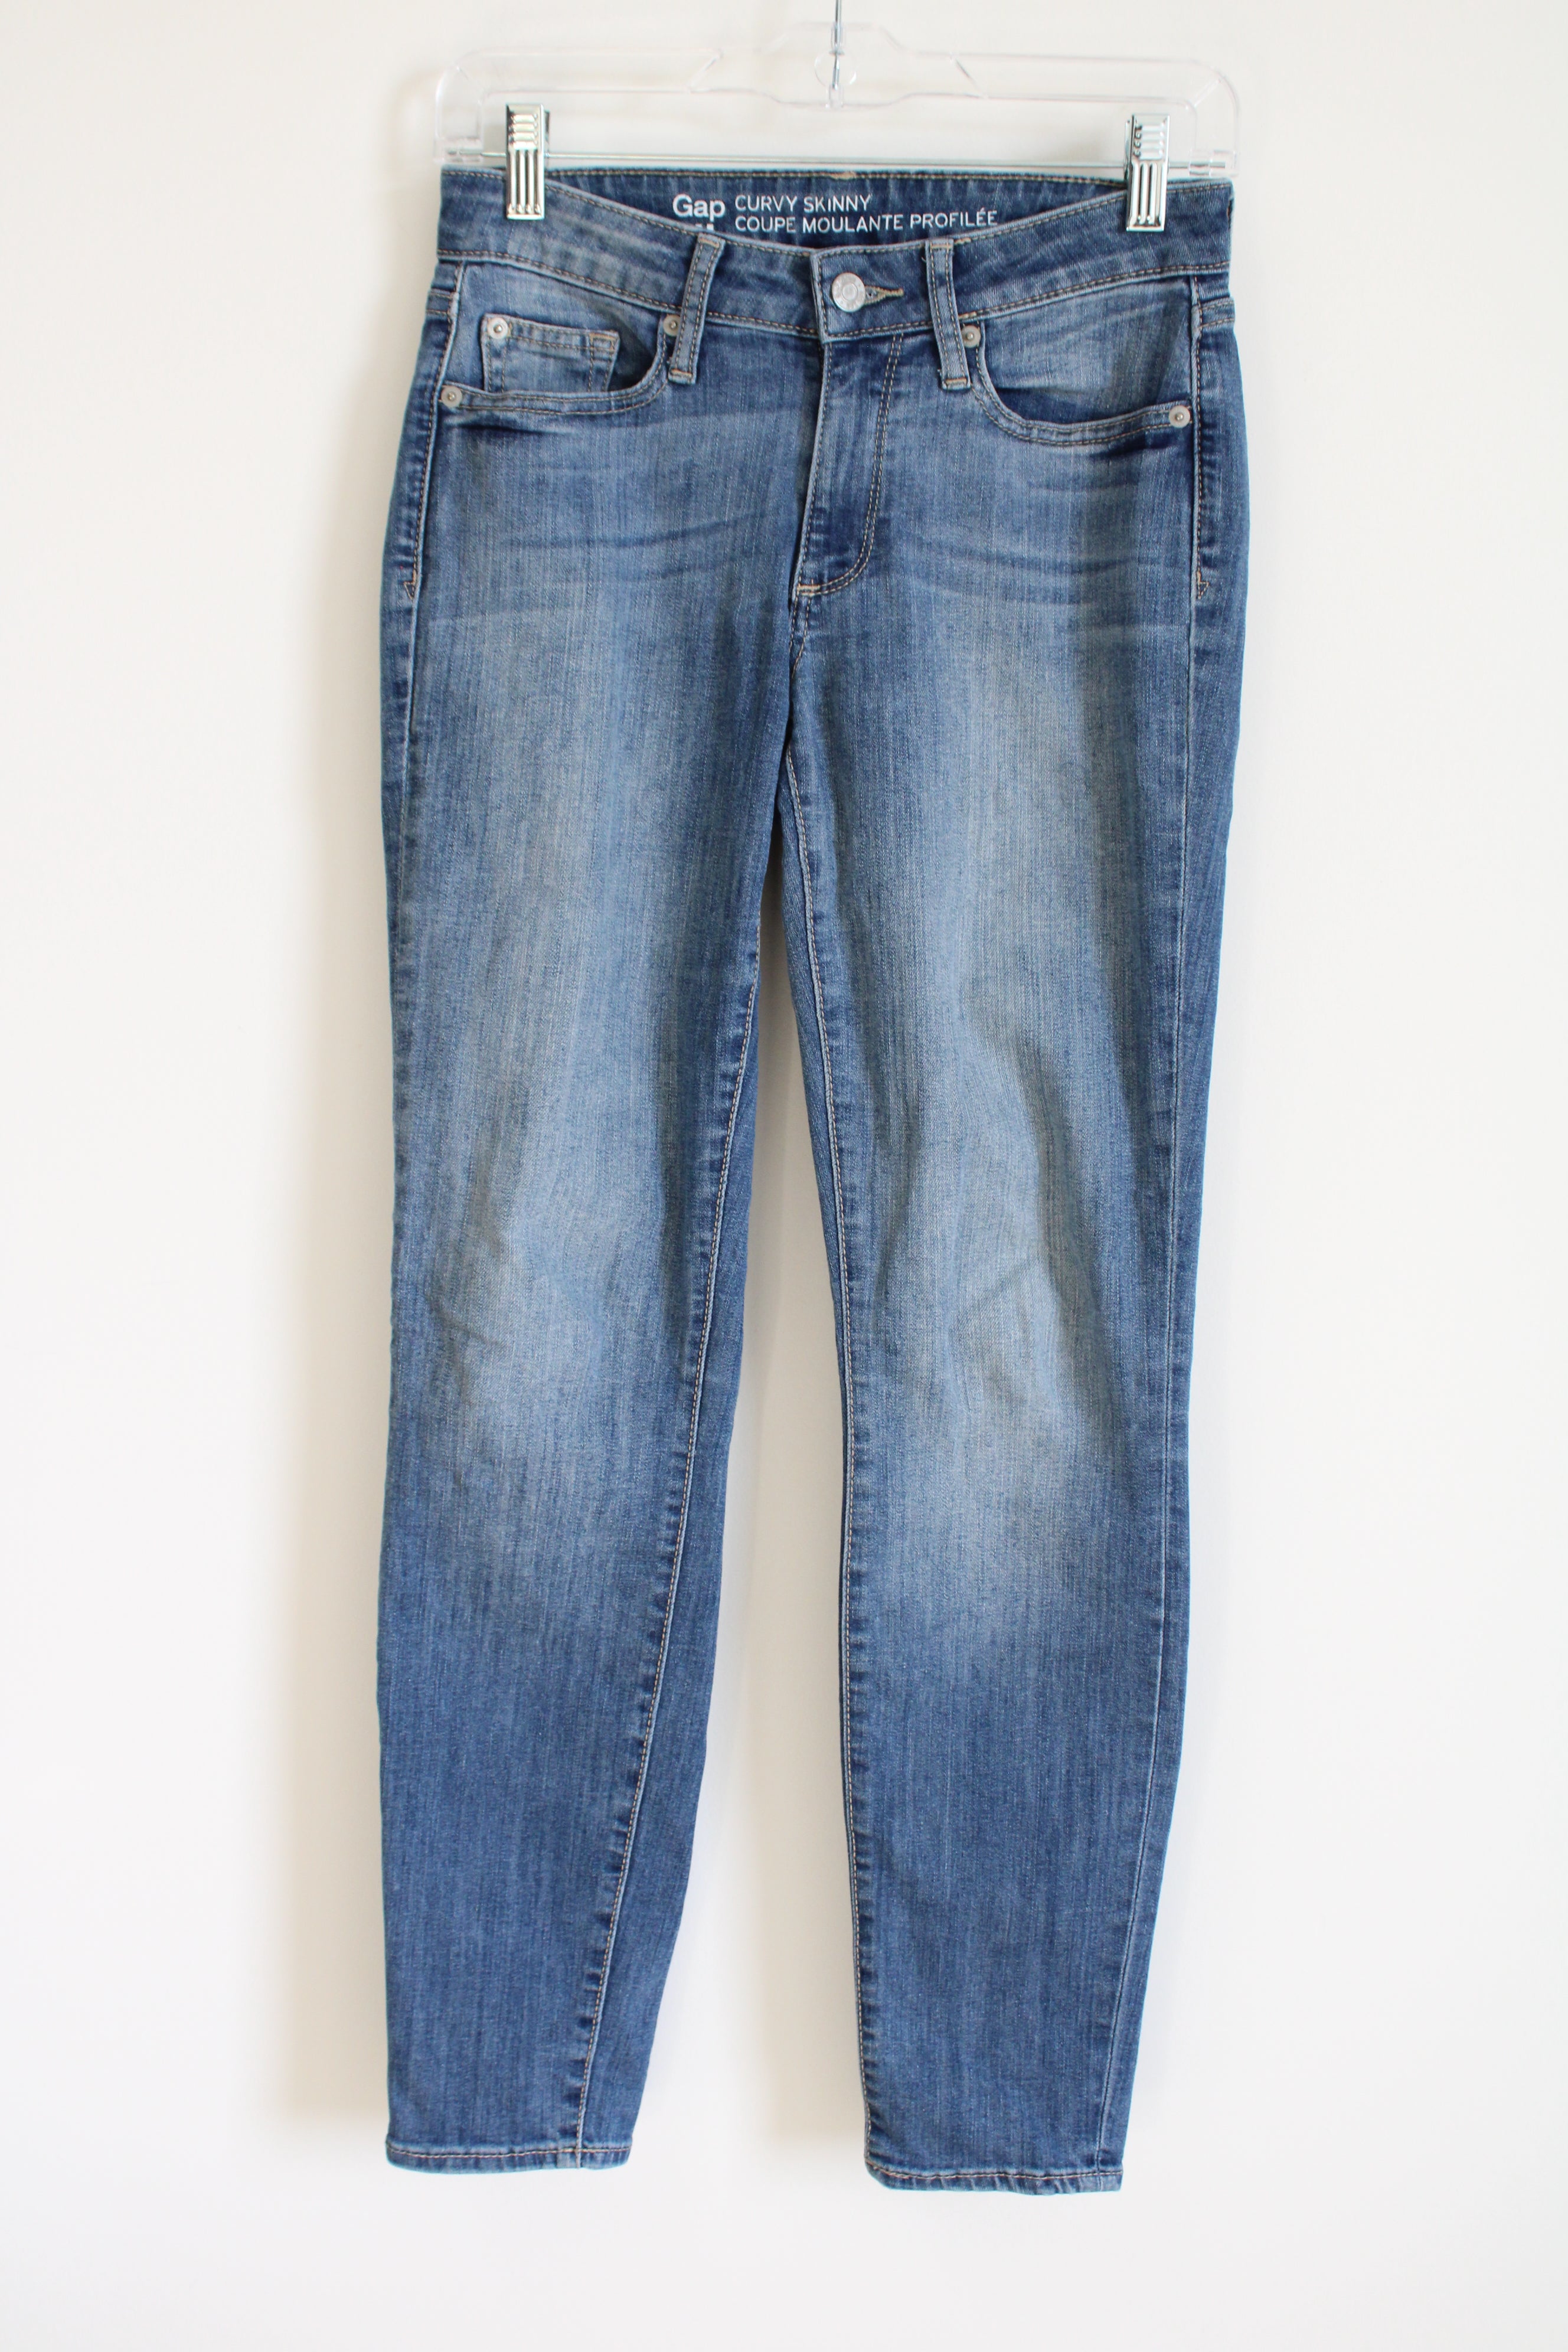 Gap Curvy Skinny Jeans | 0